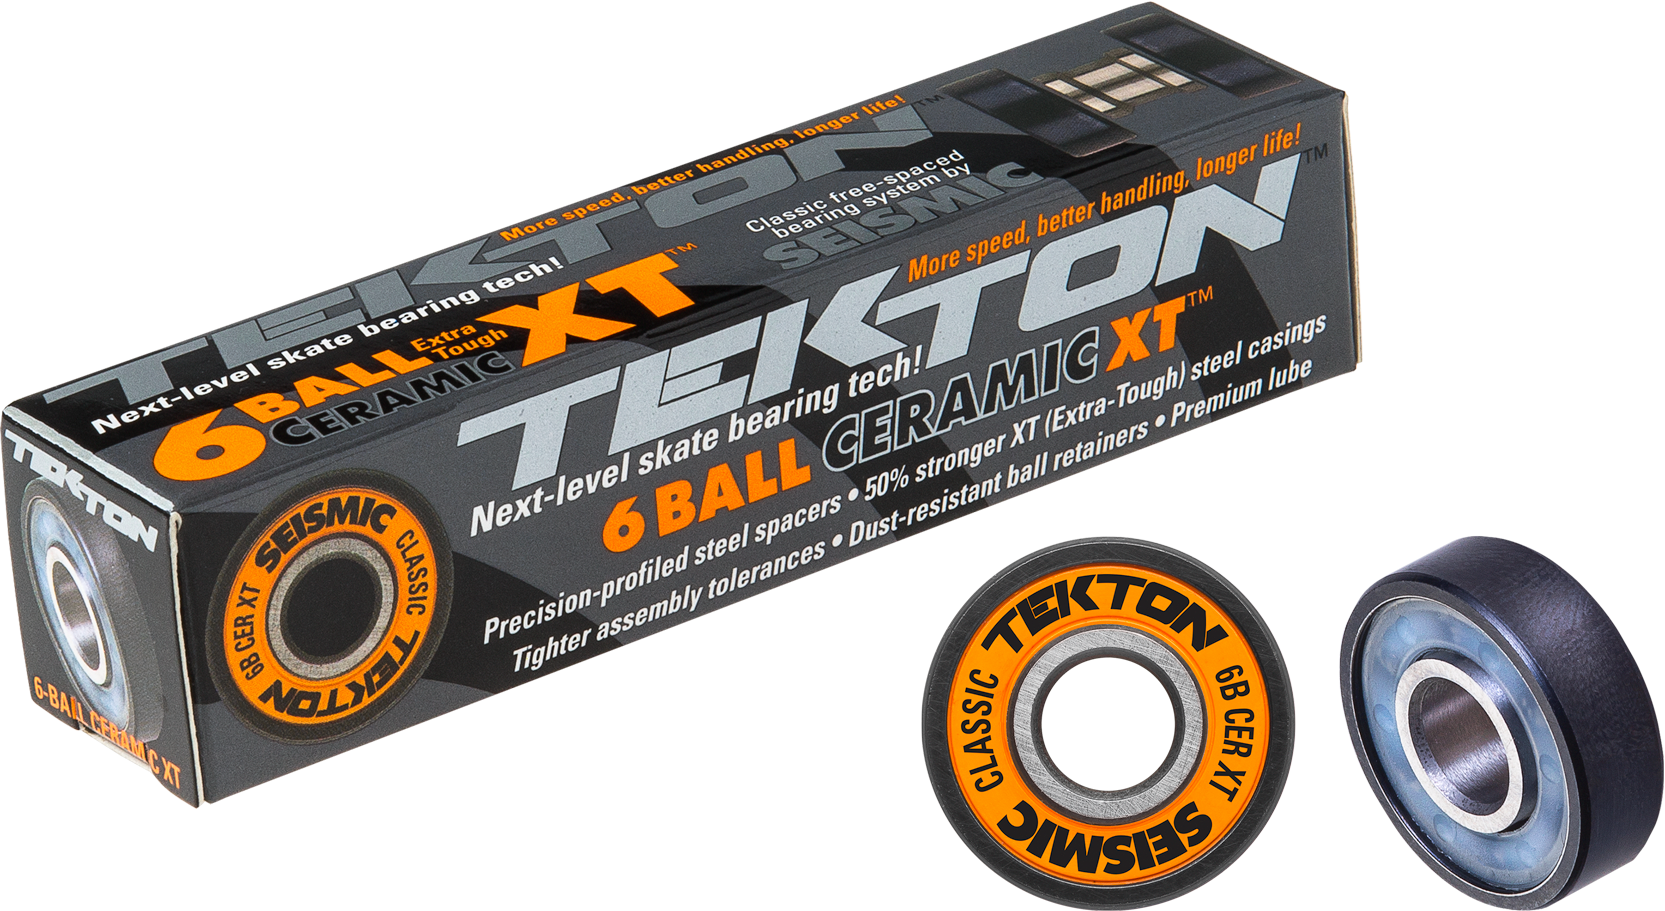 Putte Smitsom følelse Tekton 6-Ball XT Ceramic Classic Bearings - Seismic Skate